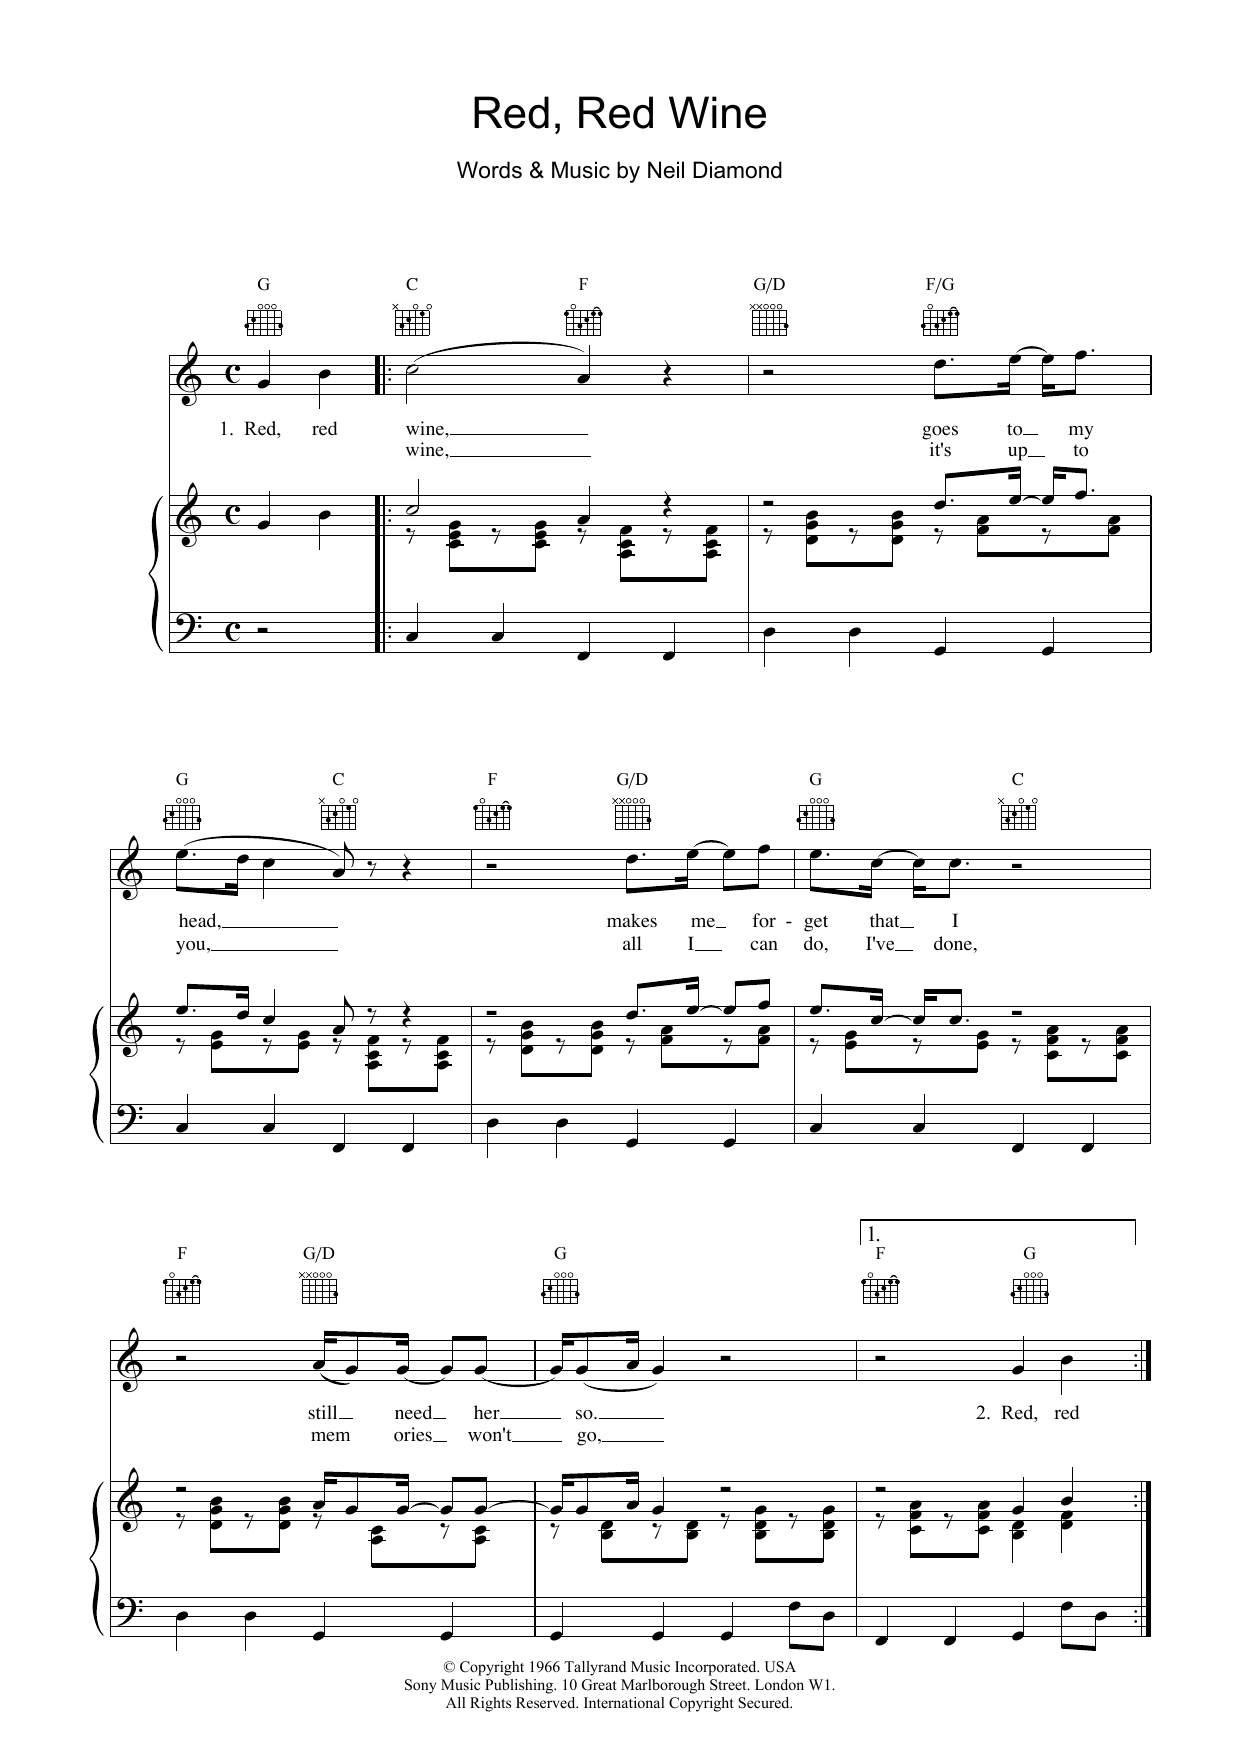 UB40 Red, Red Wine sheet music notes printable PDF score